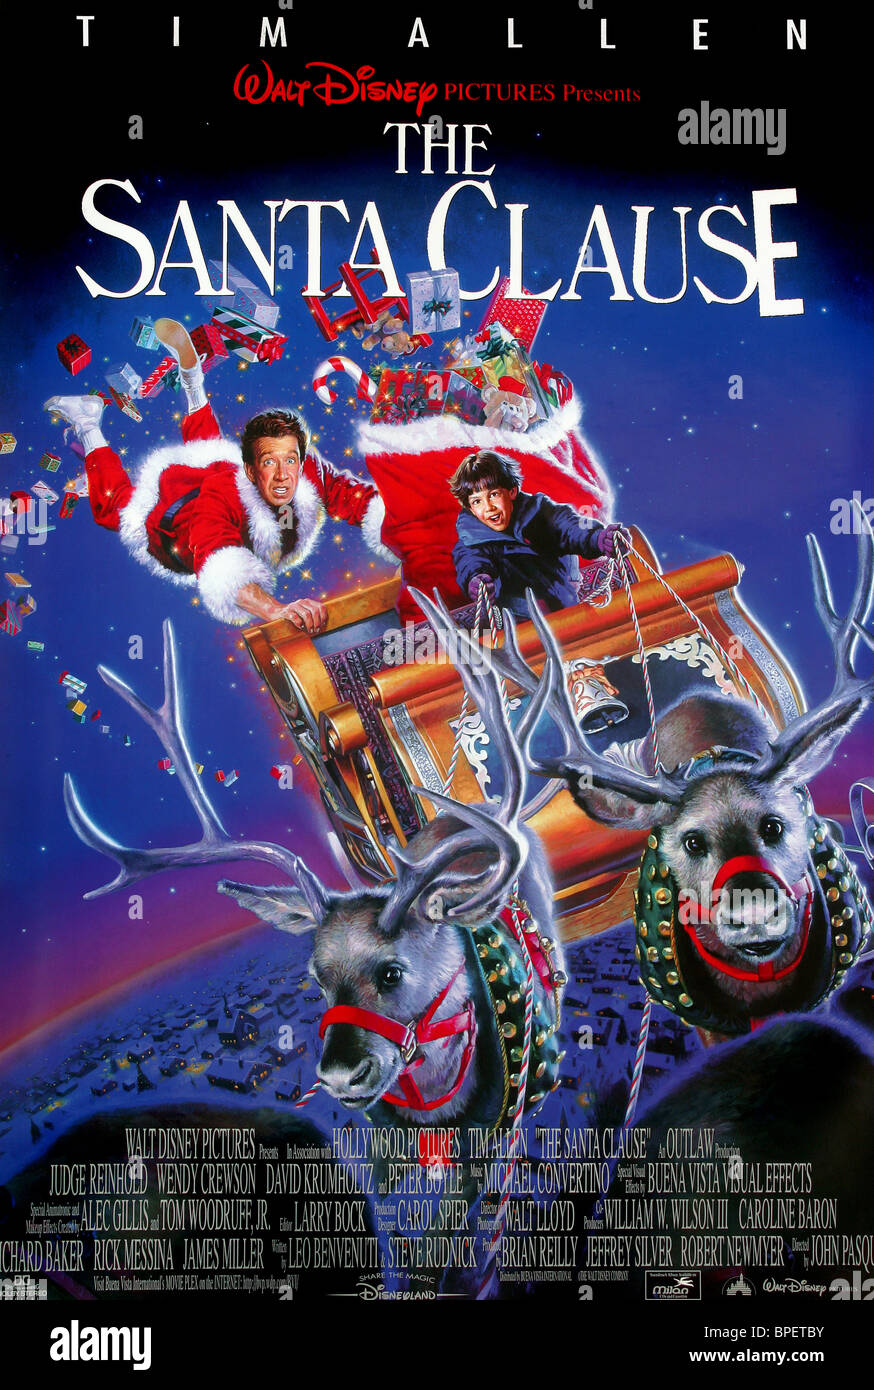 tim-allen-eric-lloyd-poster-the-santa-cl